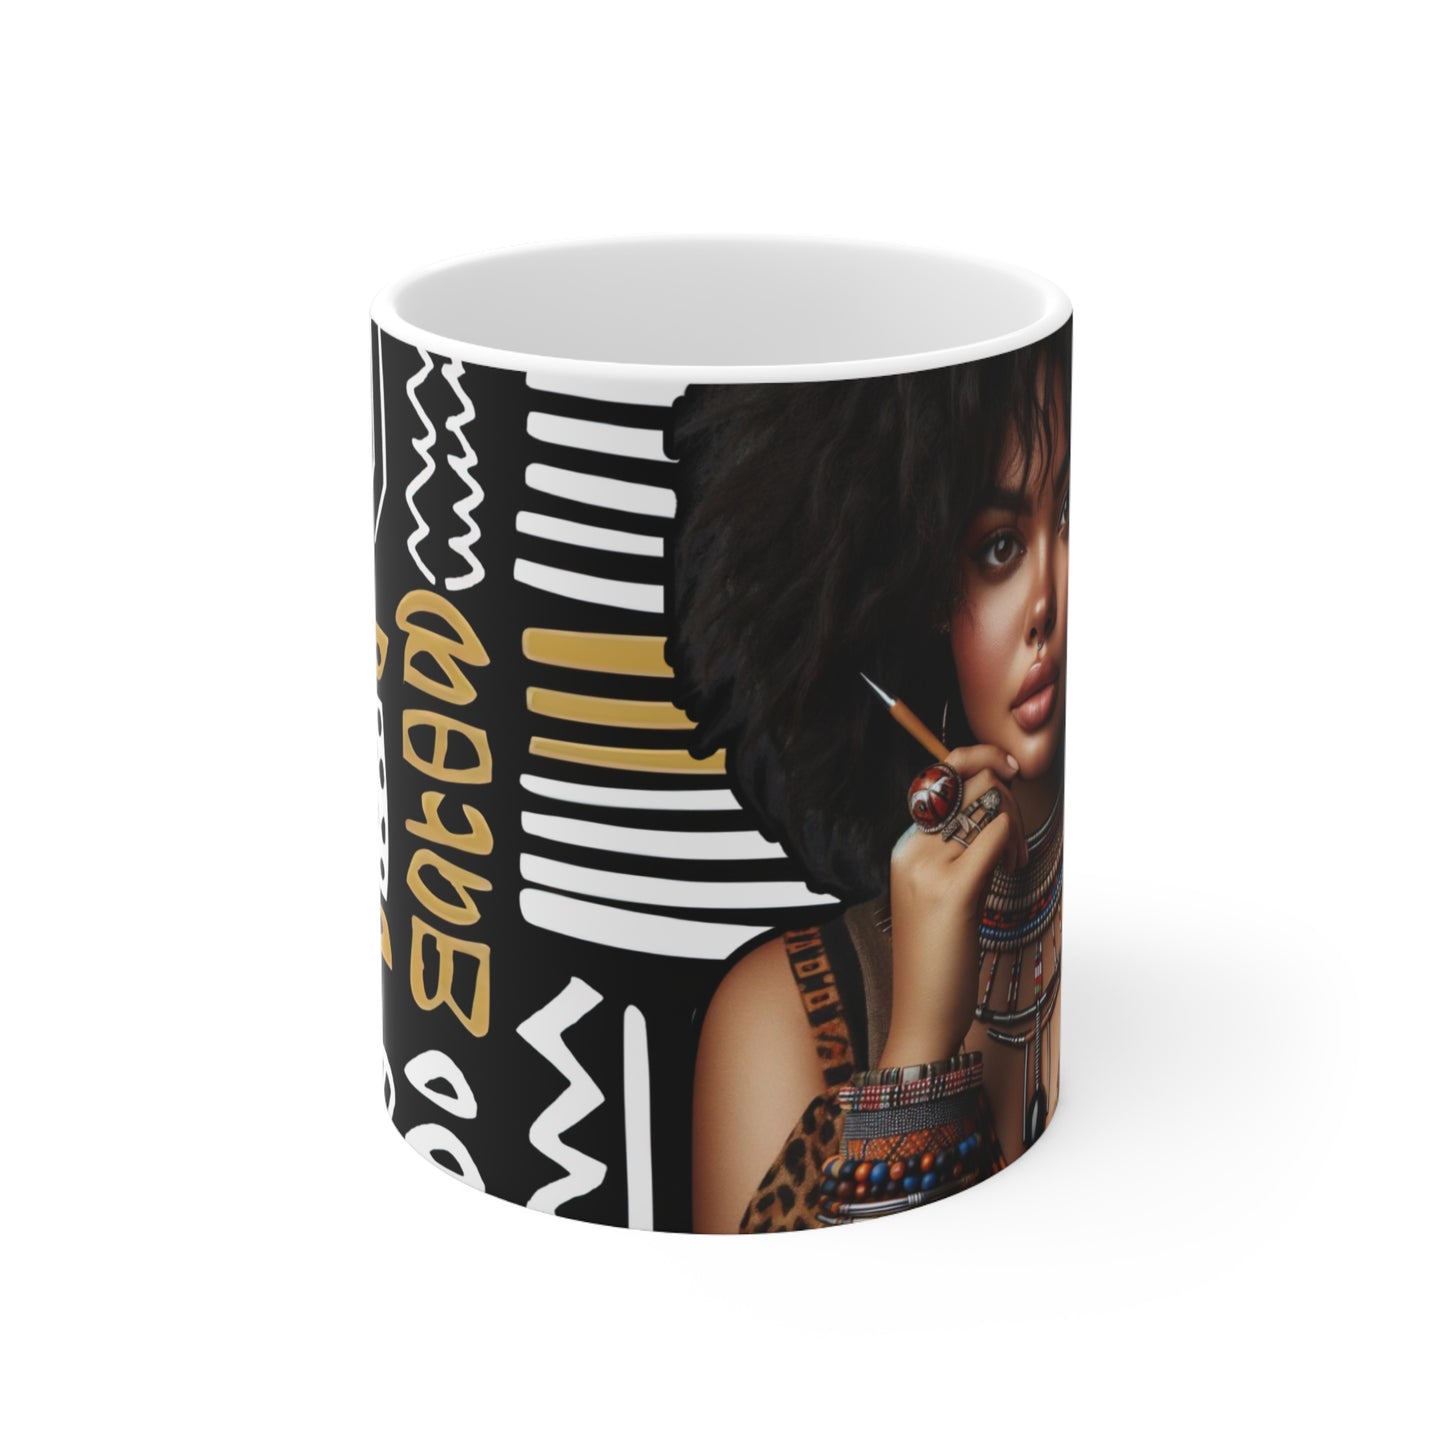 She is BEAUTIFUL Inspirational African Queen Mug - Ceramic Coffee Cups, 11oz, 15oz